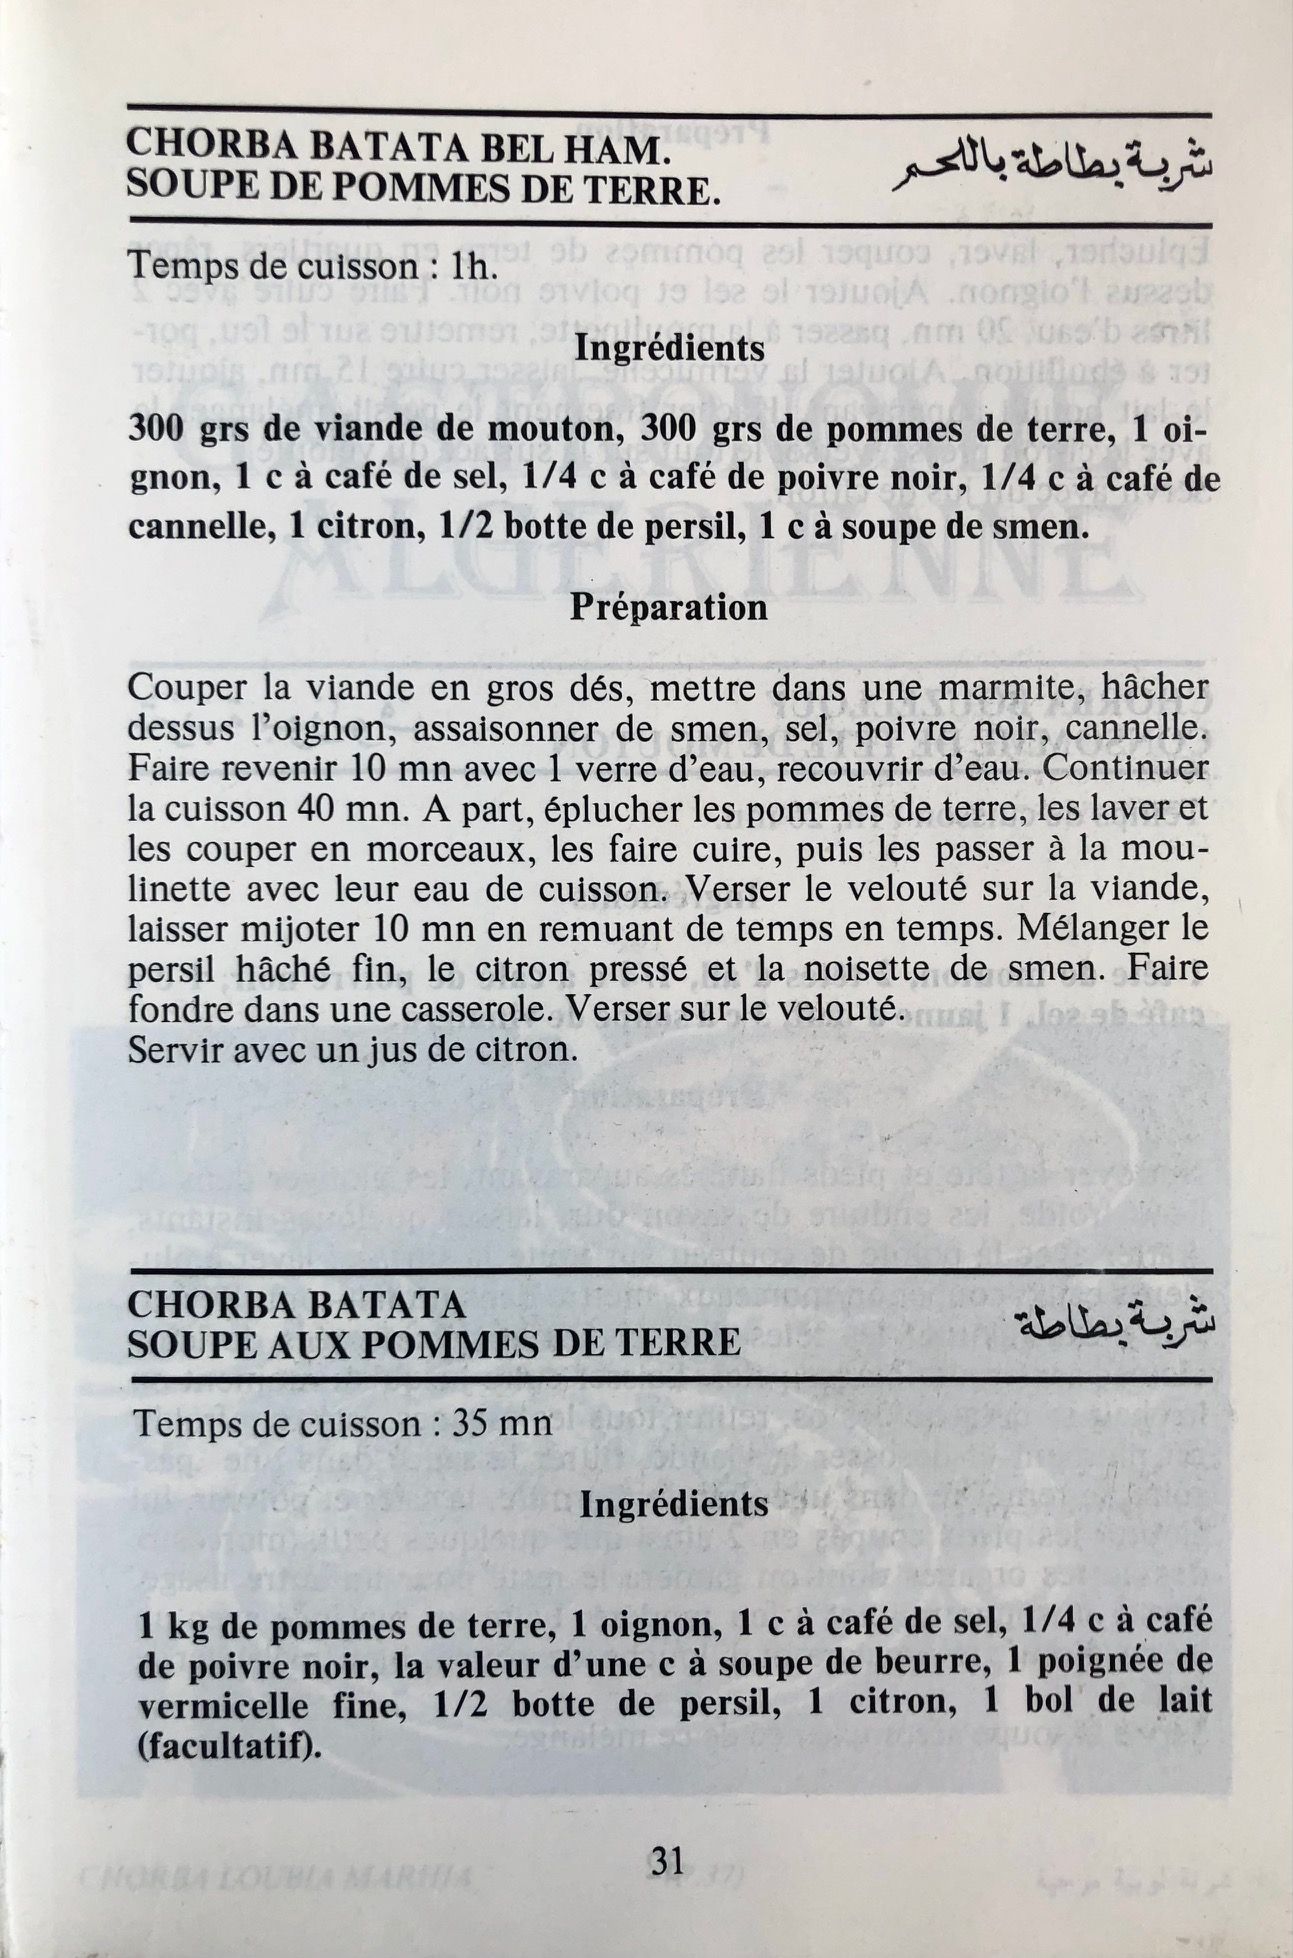 (North African) Mme. Bouksani. Gastronomie Algerienne